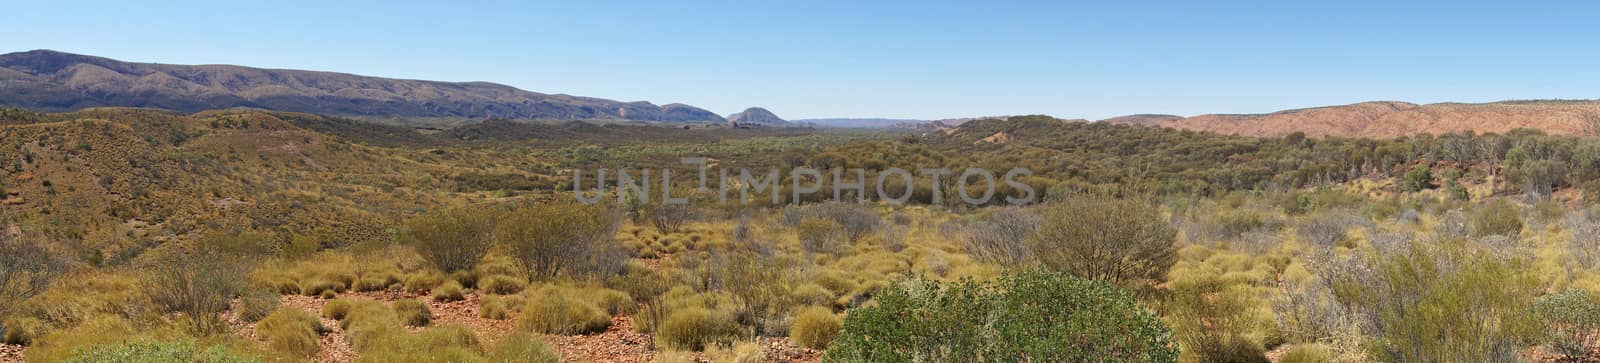 Landscape close to Alice Springs, Northern Territory, Australia